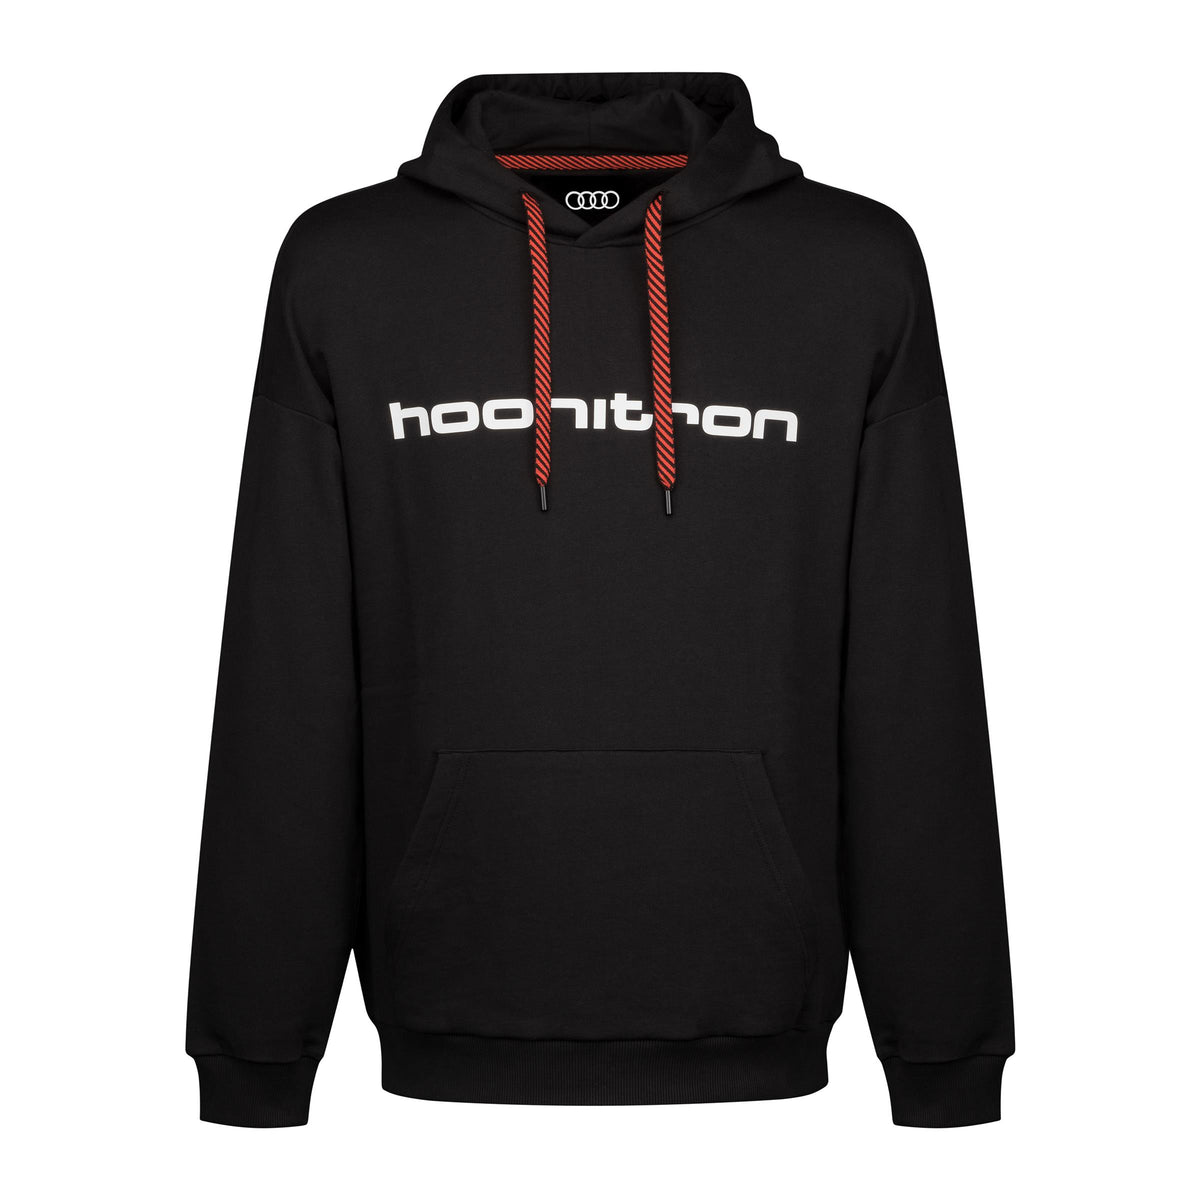 Audi Sport Hoodie, hoonitron, black | Audi Store Australia